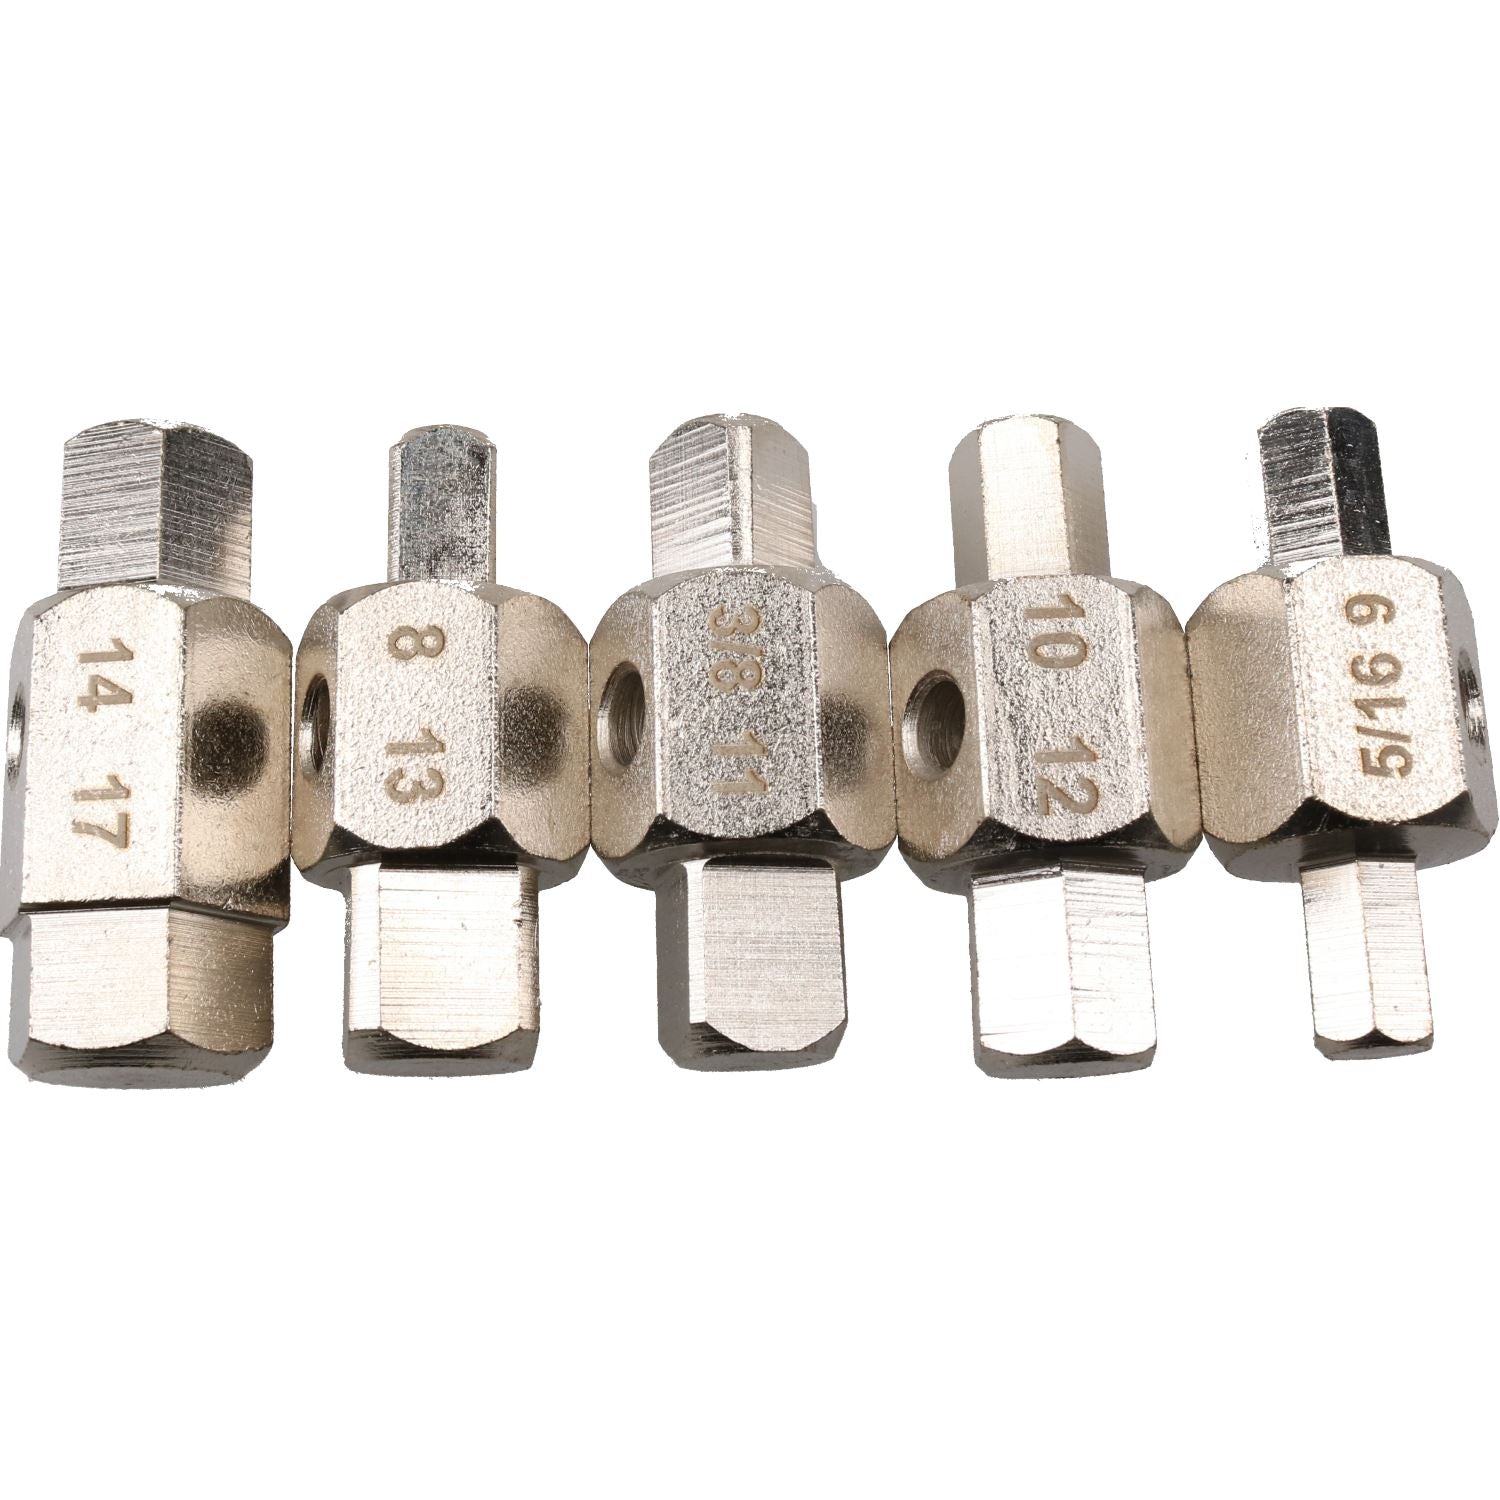 5pc 10 Sizes Drain Sump Plug Key Set For Gear Box Diffs Plugs Oil Change